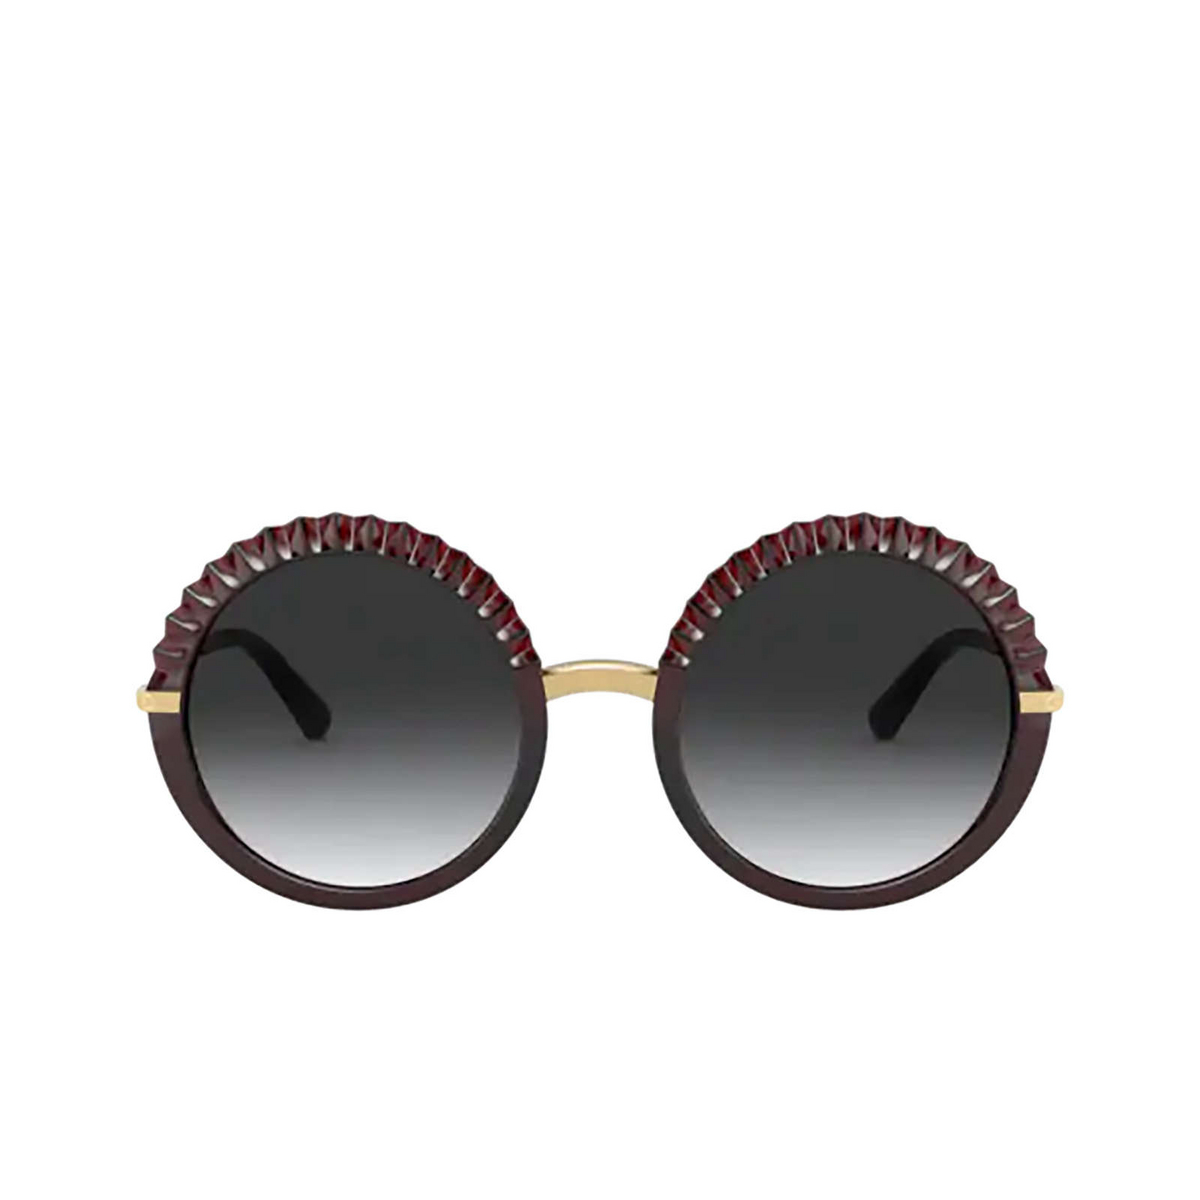 Dolce & Gabbana® Round Sunglasses: DG6130 color Transparent Red 550/8G - 1/3.